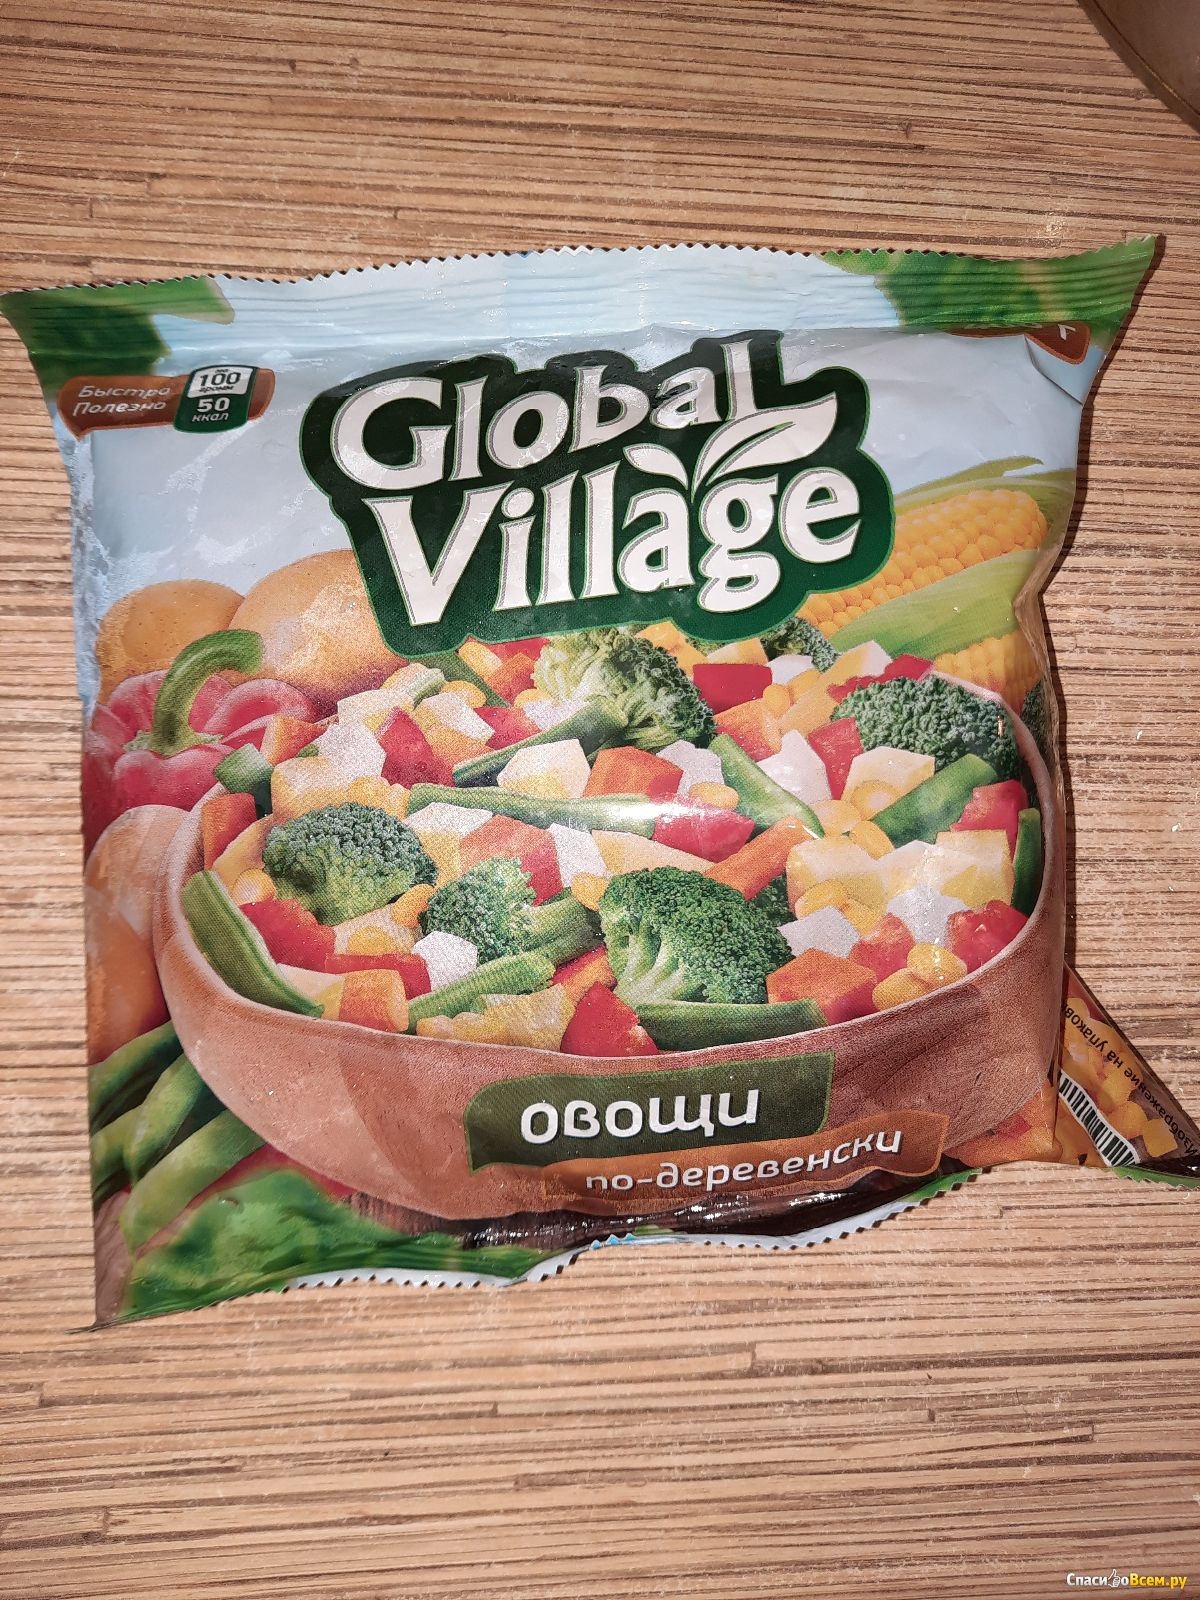 Global village овощи. Смесь овощей Глобал Вилладж. Овощная смесь Глобал Виладж. Глобал Вилладж овощи замороженные. Овощная смесь замороженная Global Village.